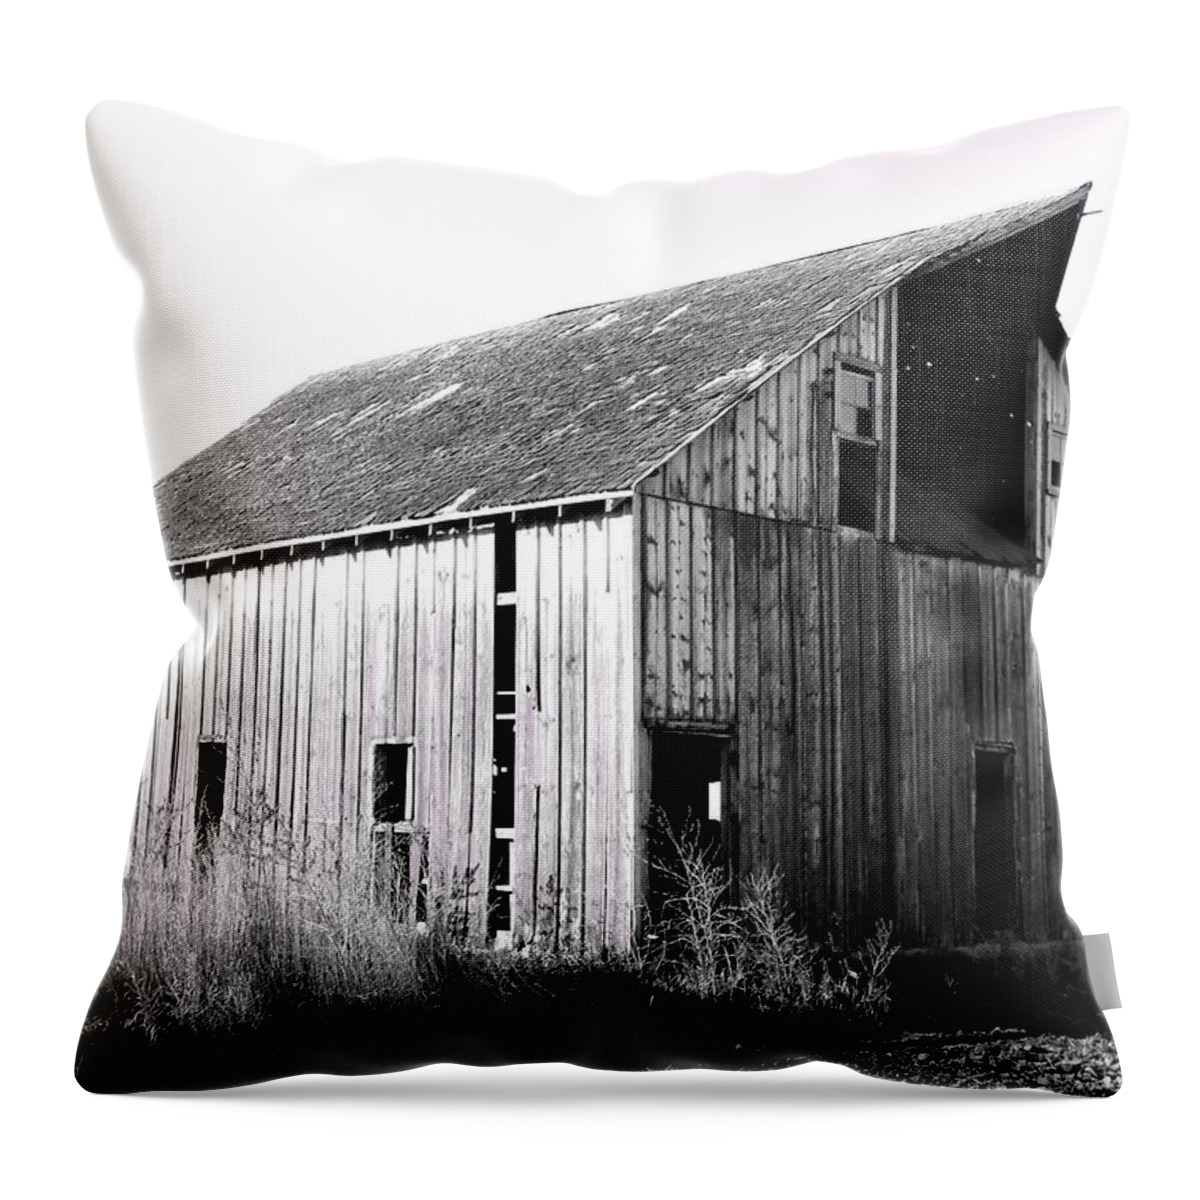 Barn Throw Pillow featuring the photograph Albert City Barn 3 by Julie Hamilton